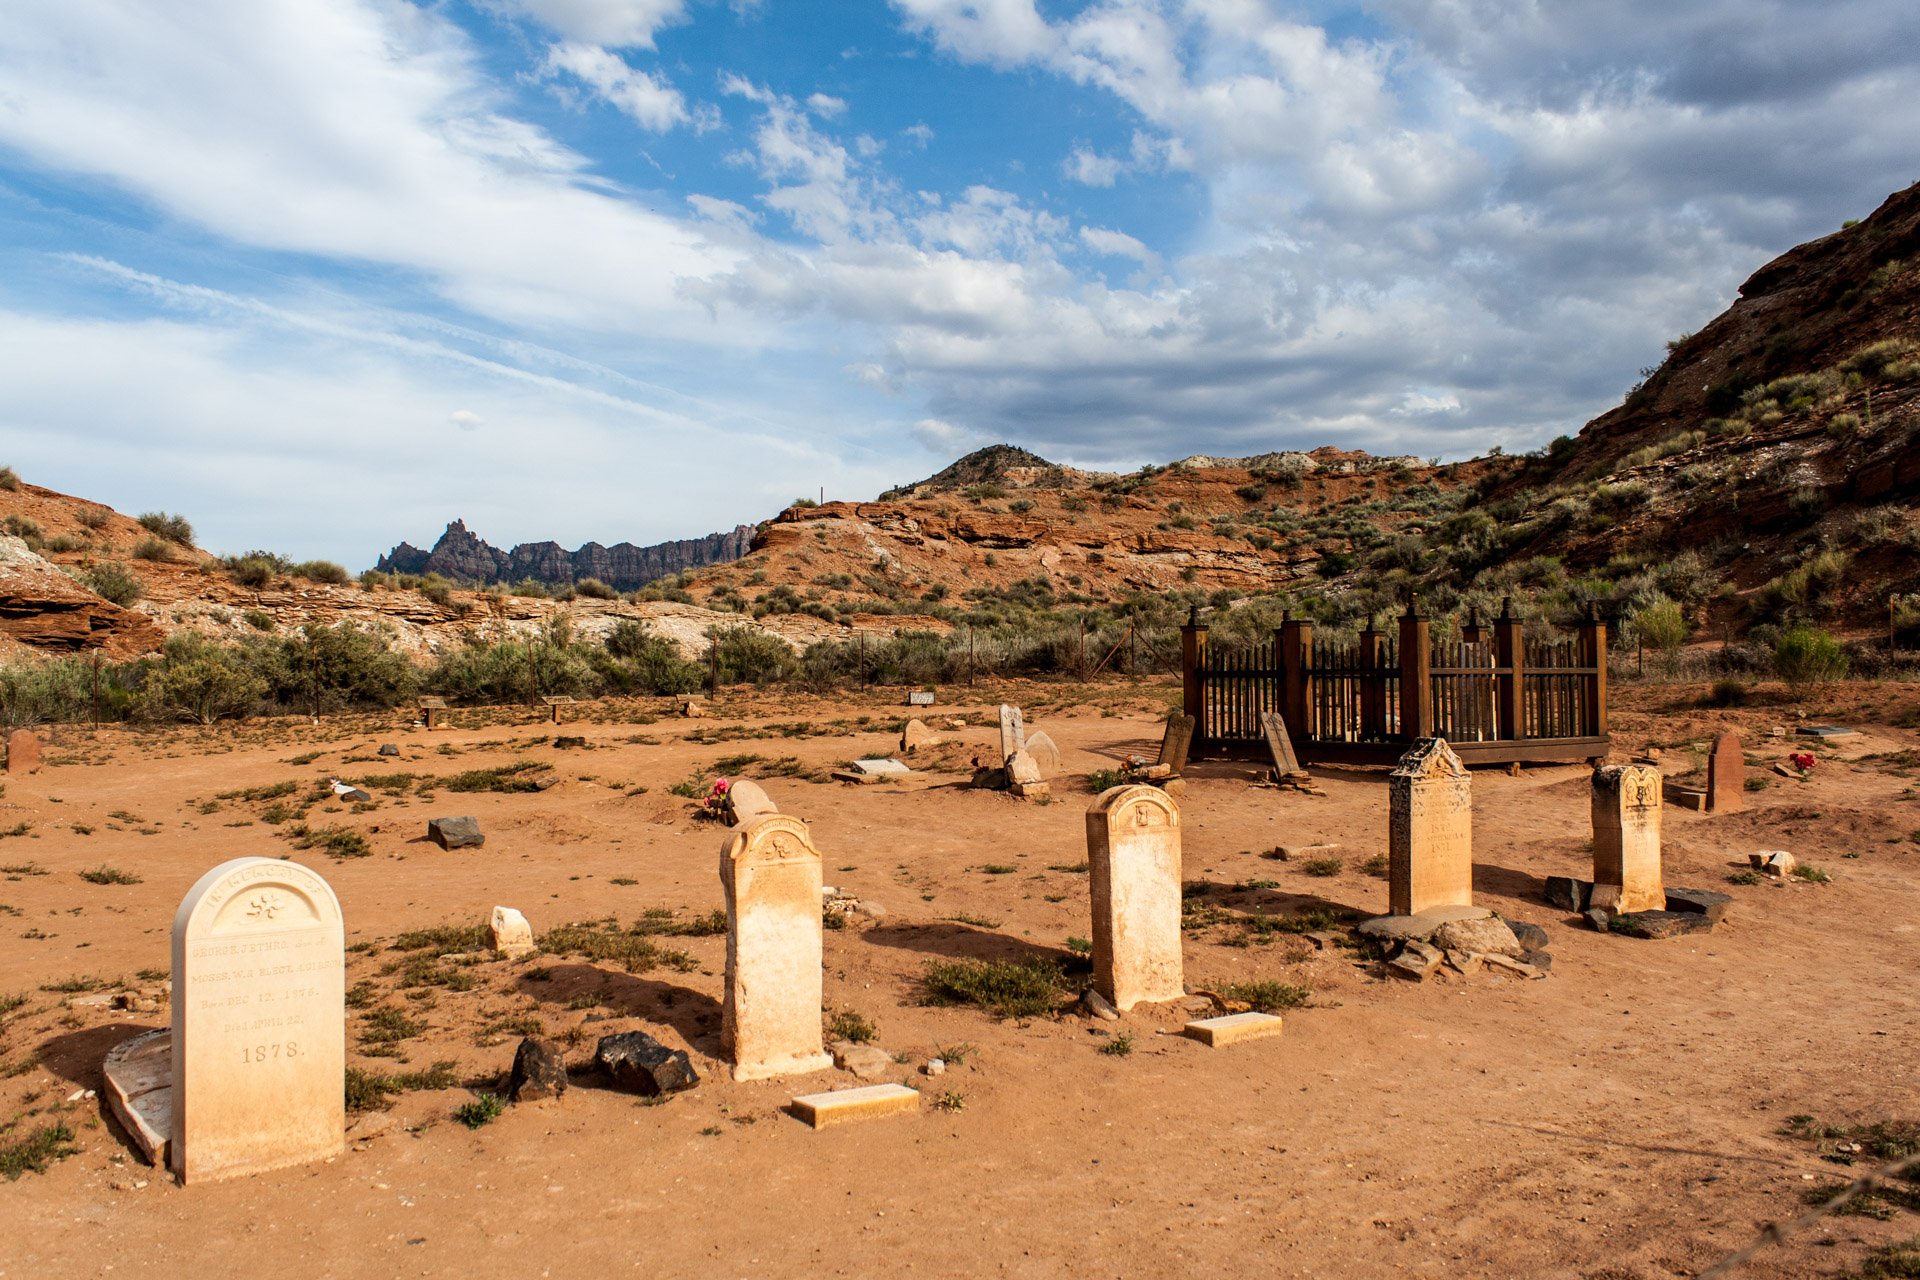 A Desert Ghost Town Cemetery (right far)